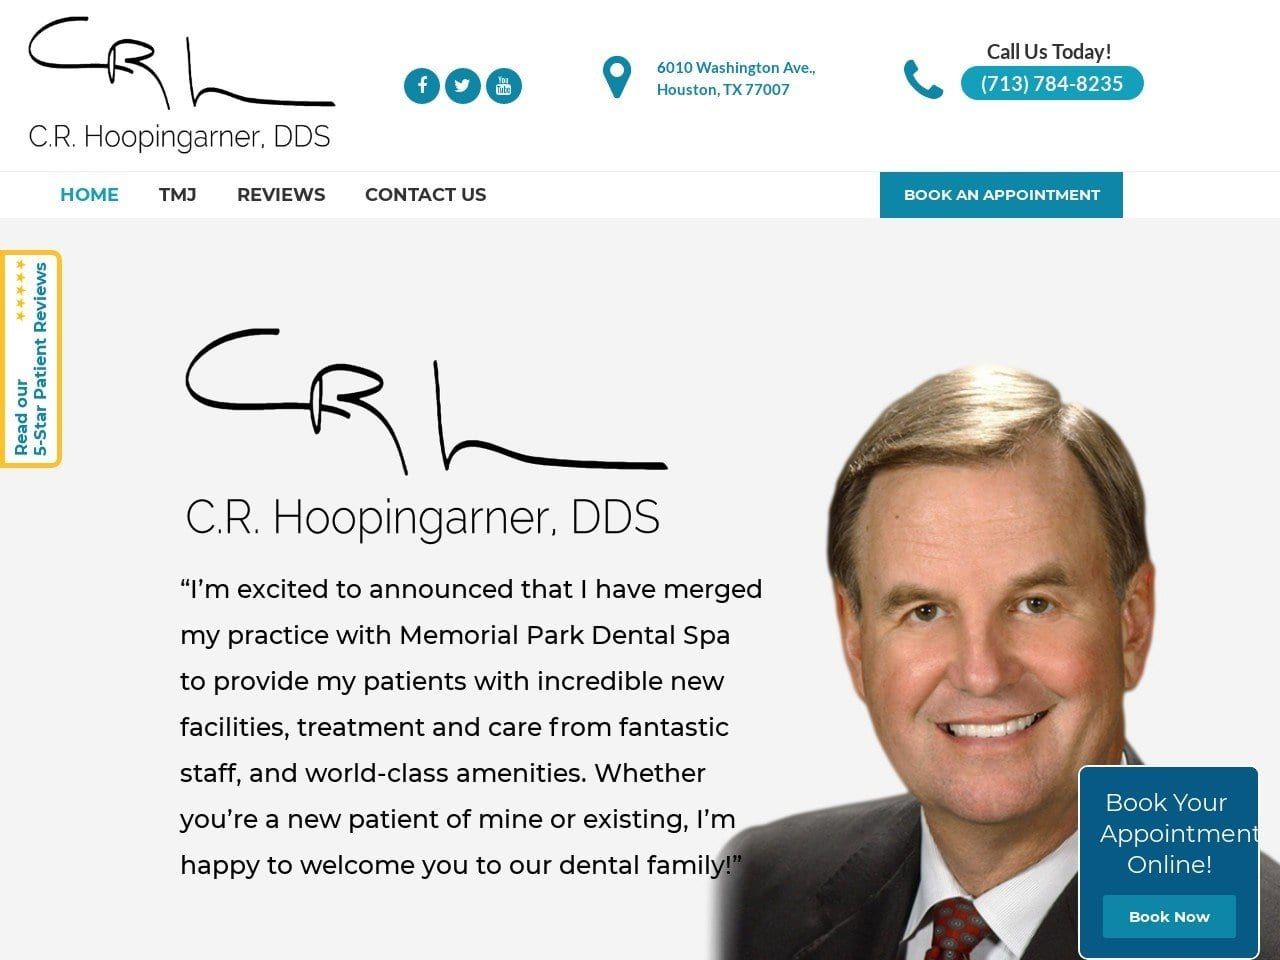 C. R. Hoopingarner DDS Website Screenshot from drhoop.com